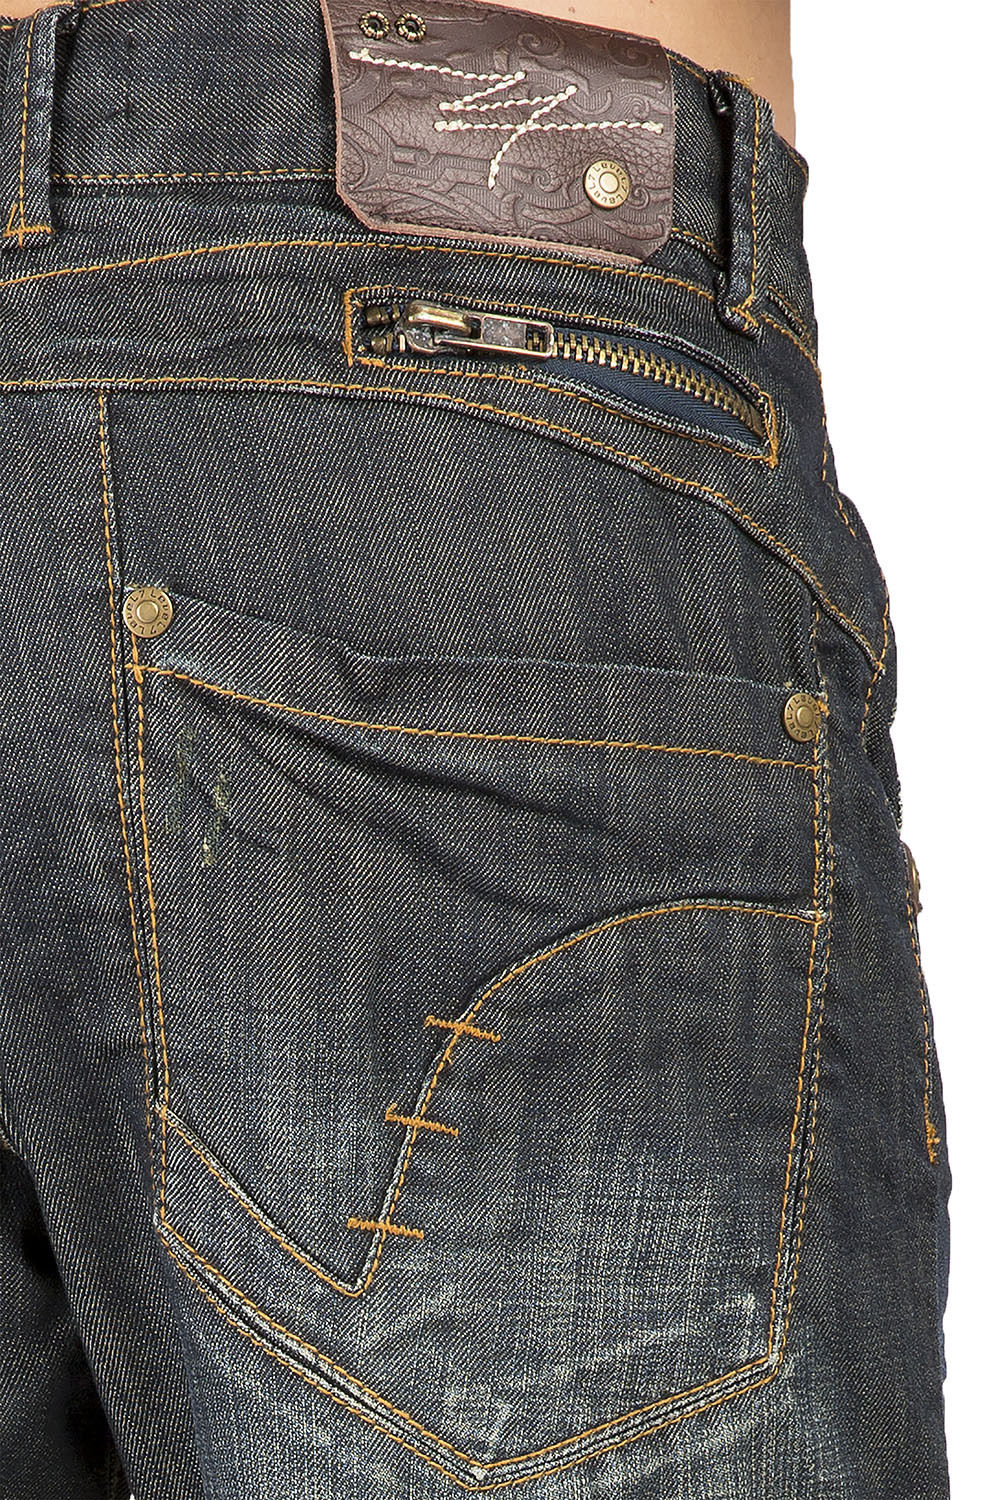 Relaxed Straight Dark Vintage Hand Rub Premium Denim Jeans Zipper Trim Pocket